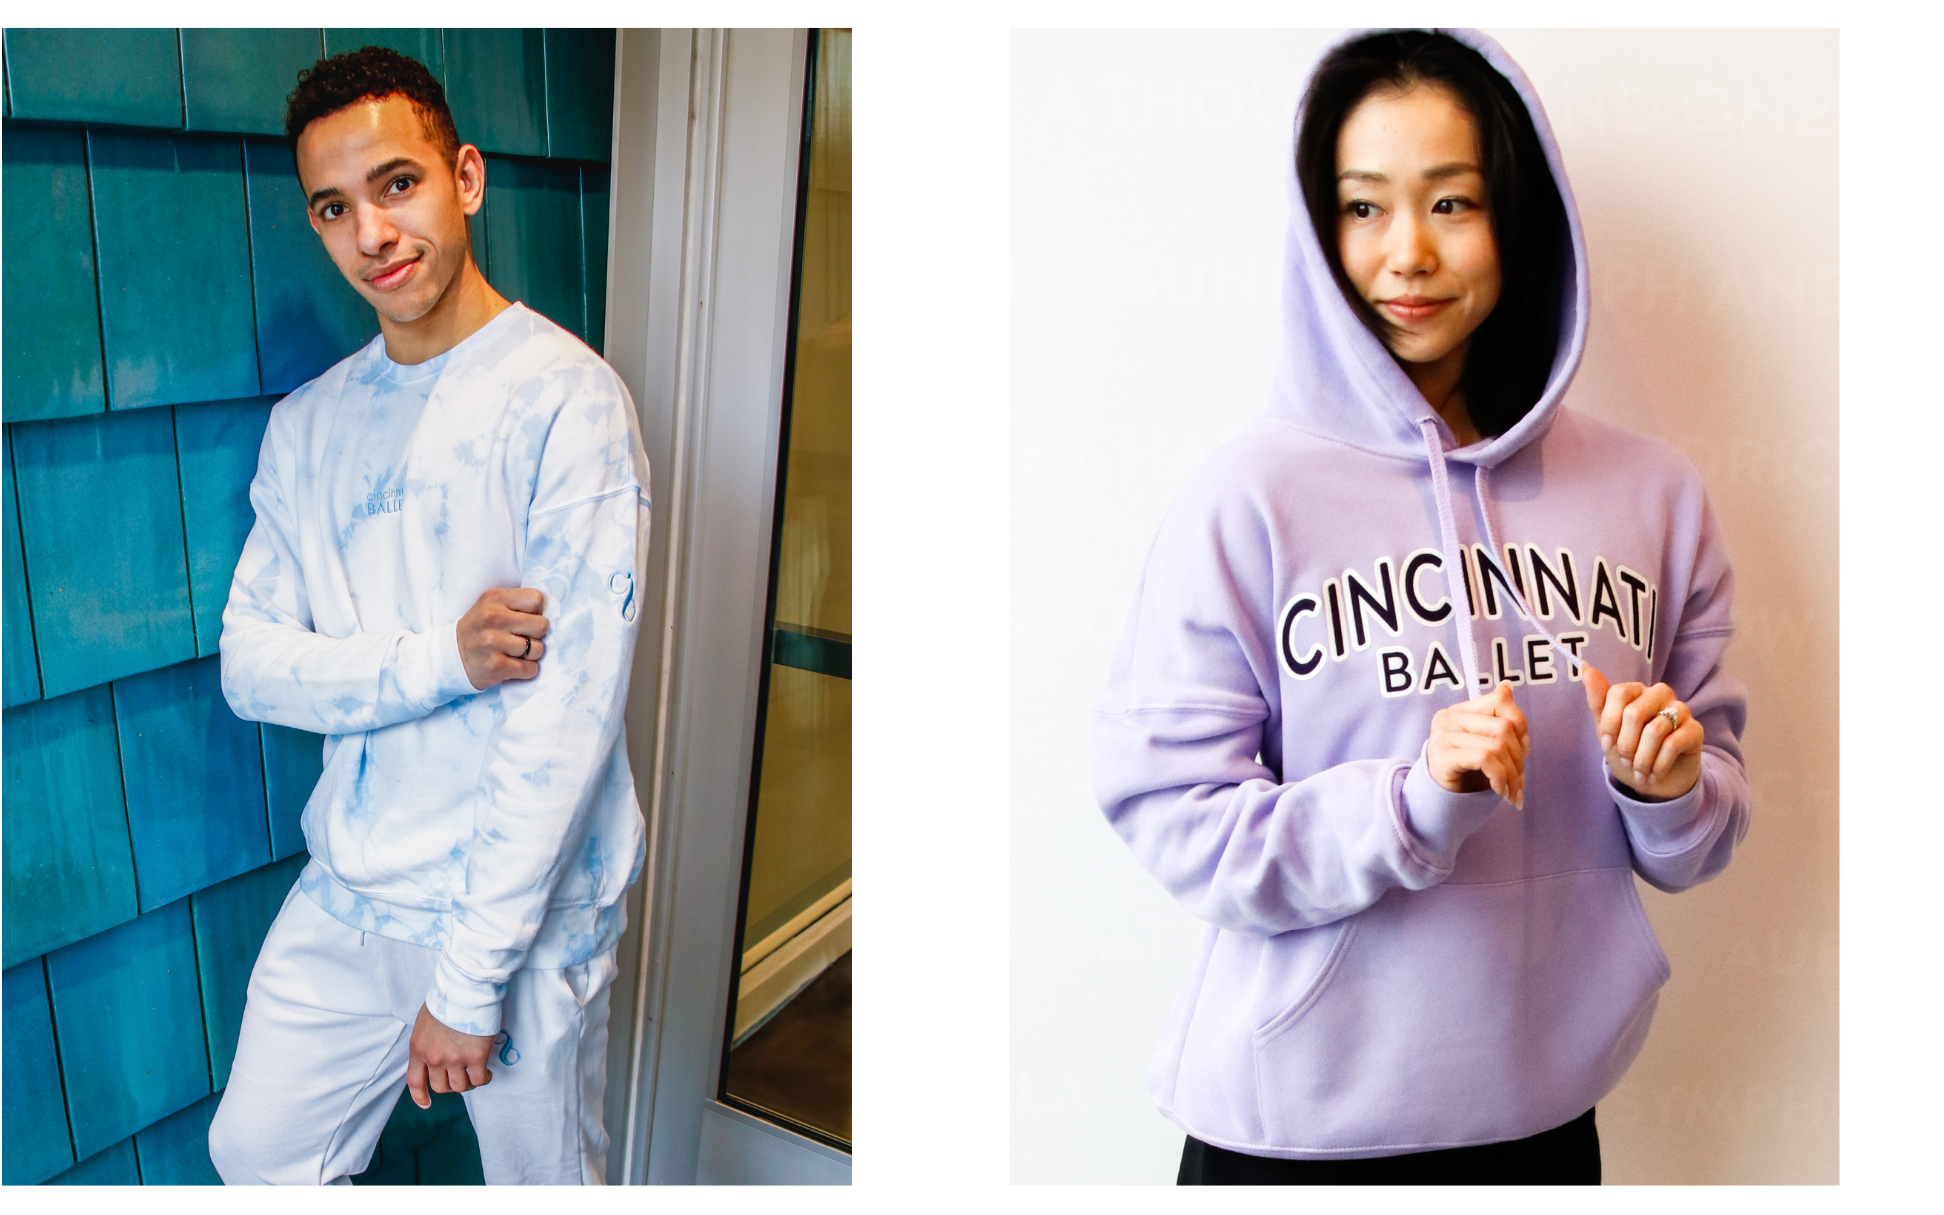 Cincinnati Ballet's exclusive merch and apparel featuring the Tie-Dye blue sweatshirt and Purple Cincinnati Ballet hoodie